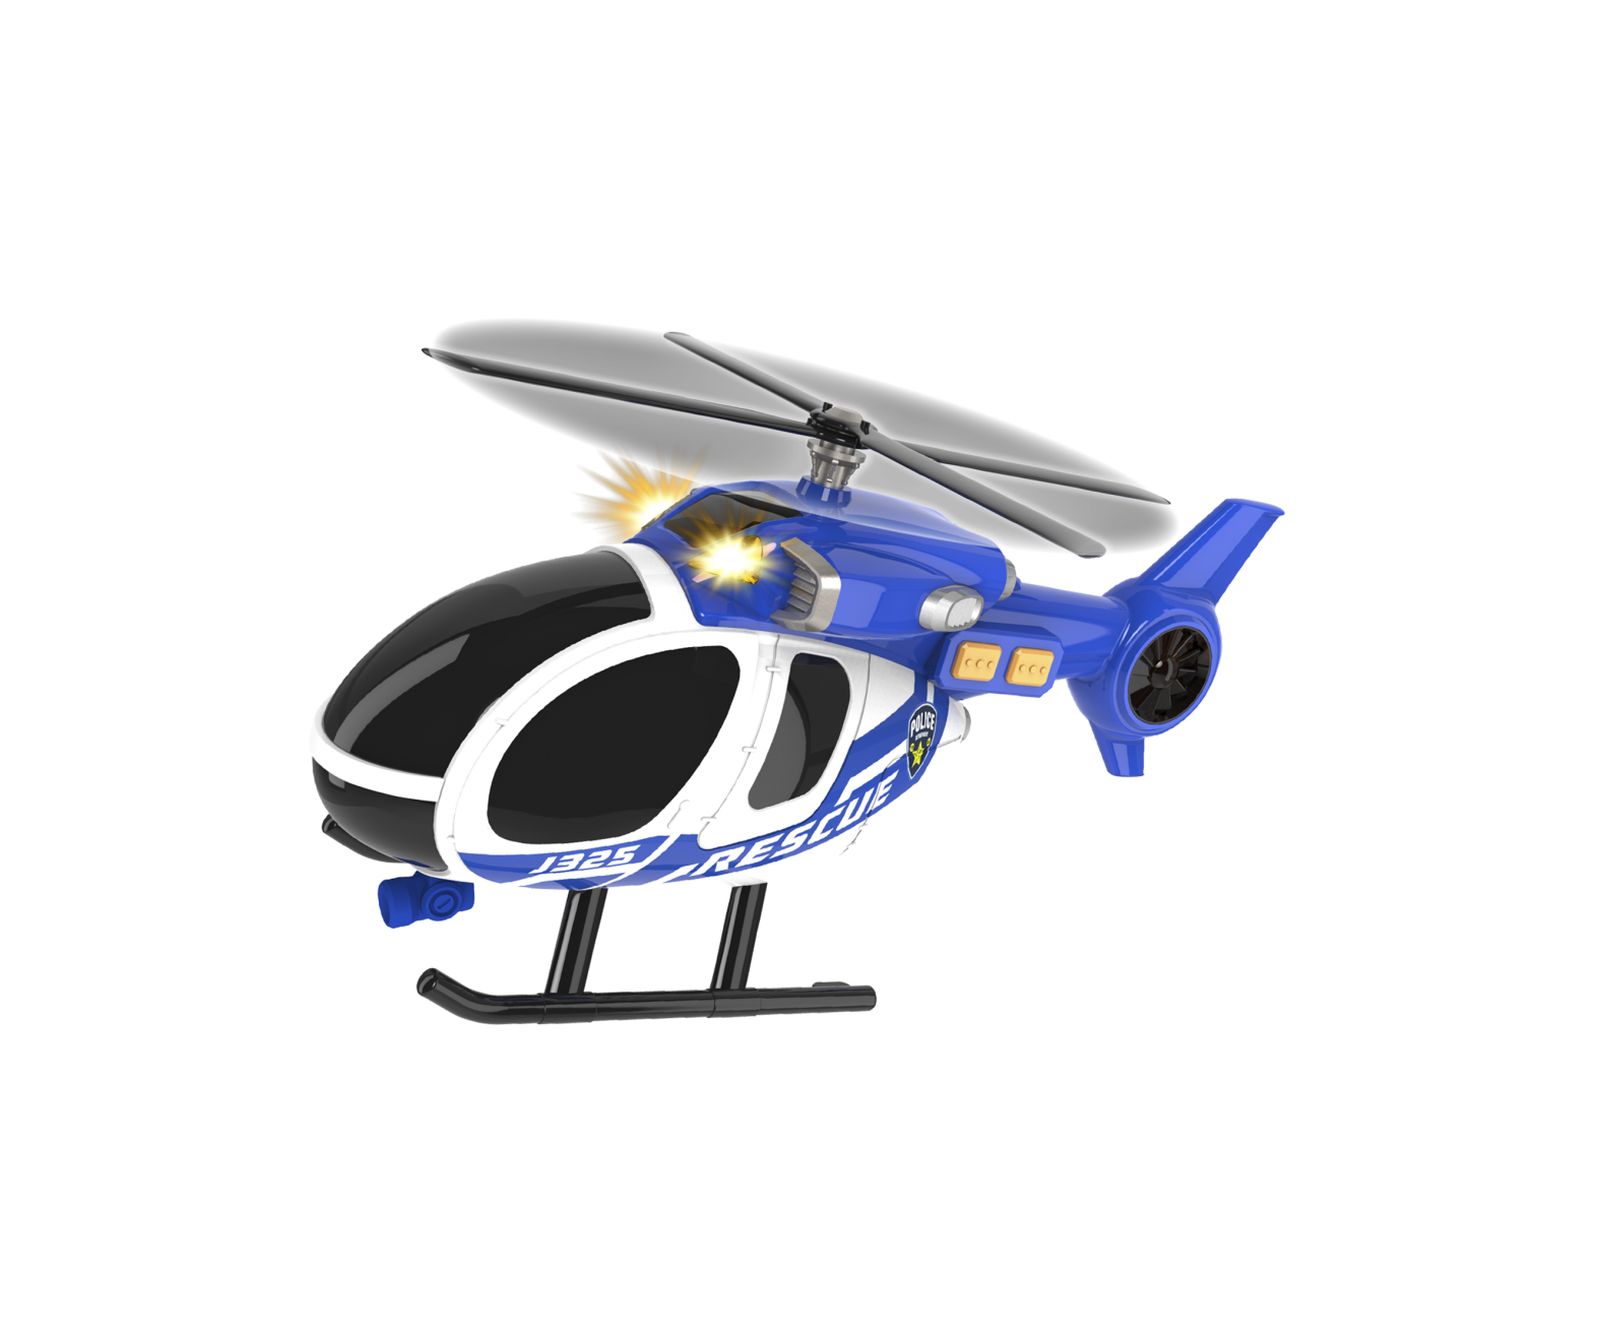 Elicottero urban copter - MOTOR & CO.